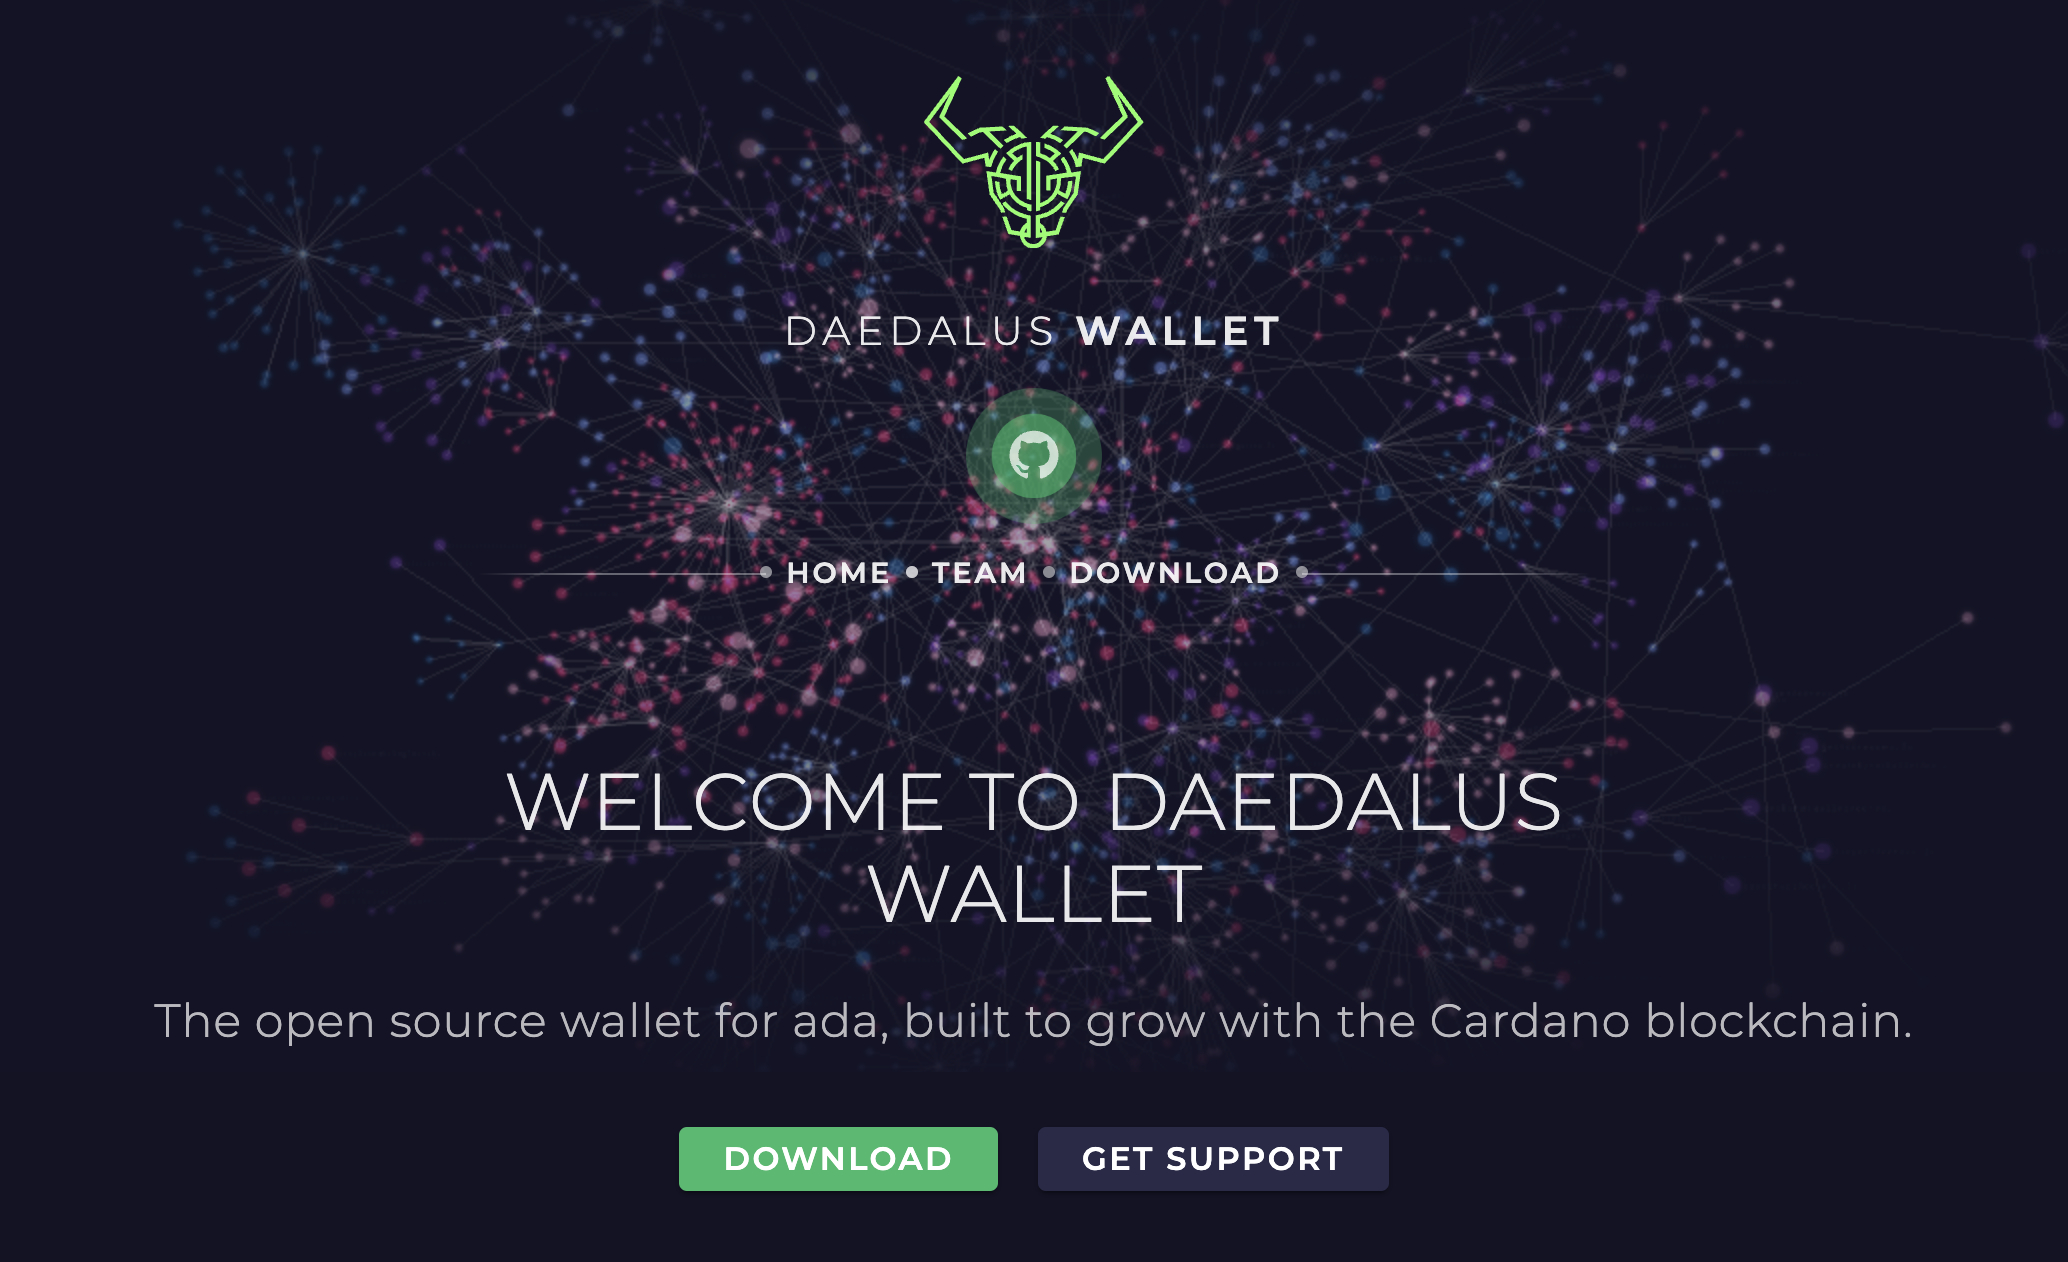 Daedalus wallet